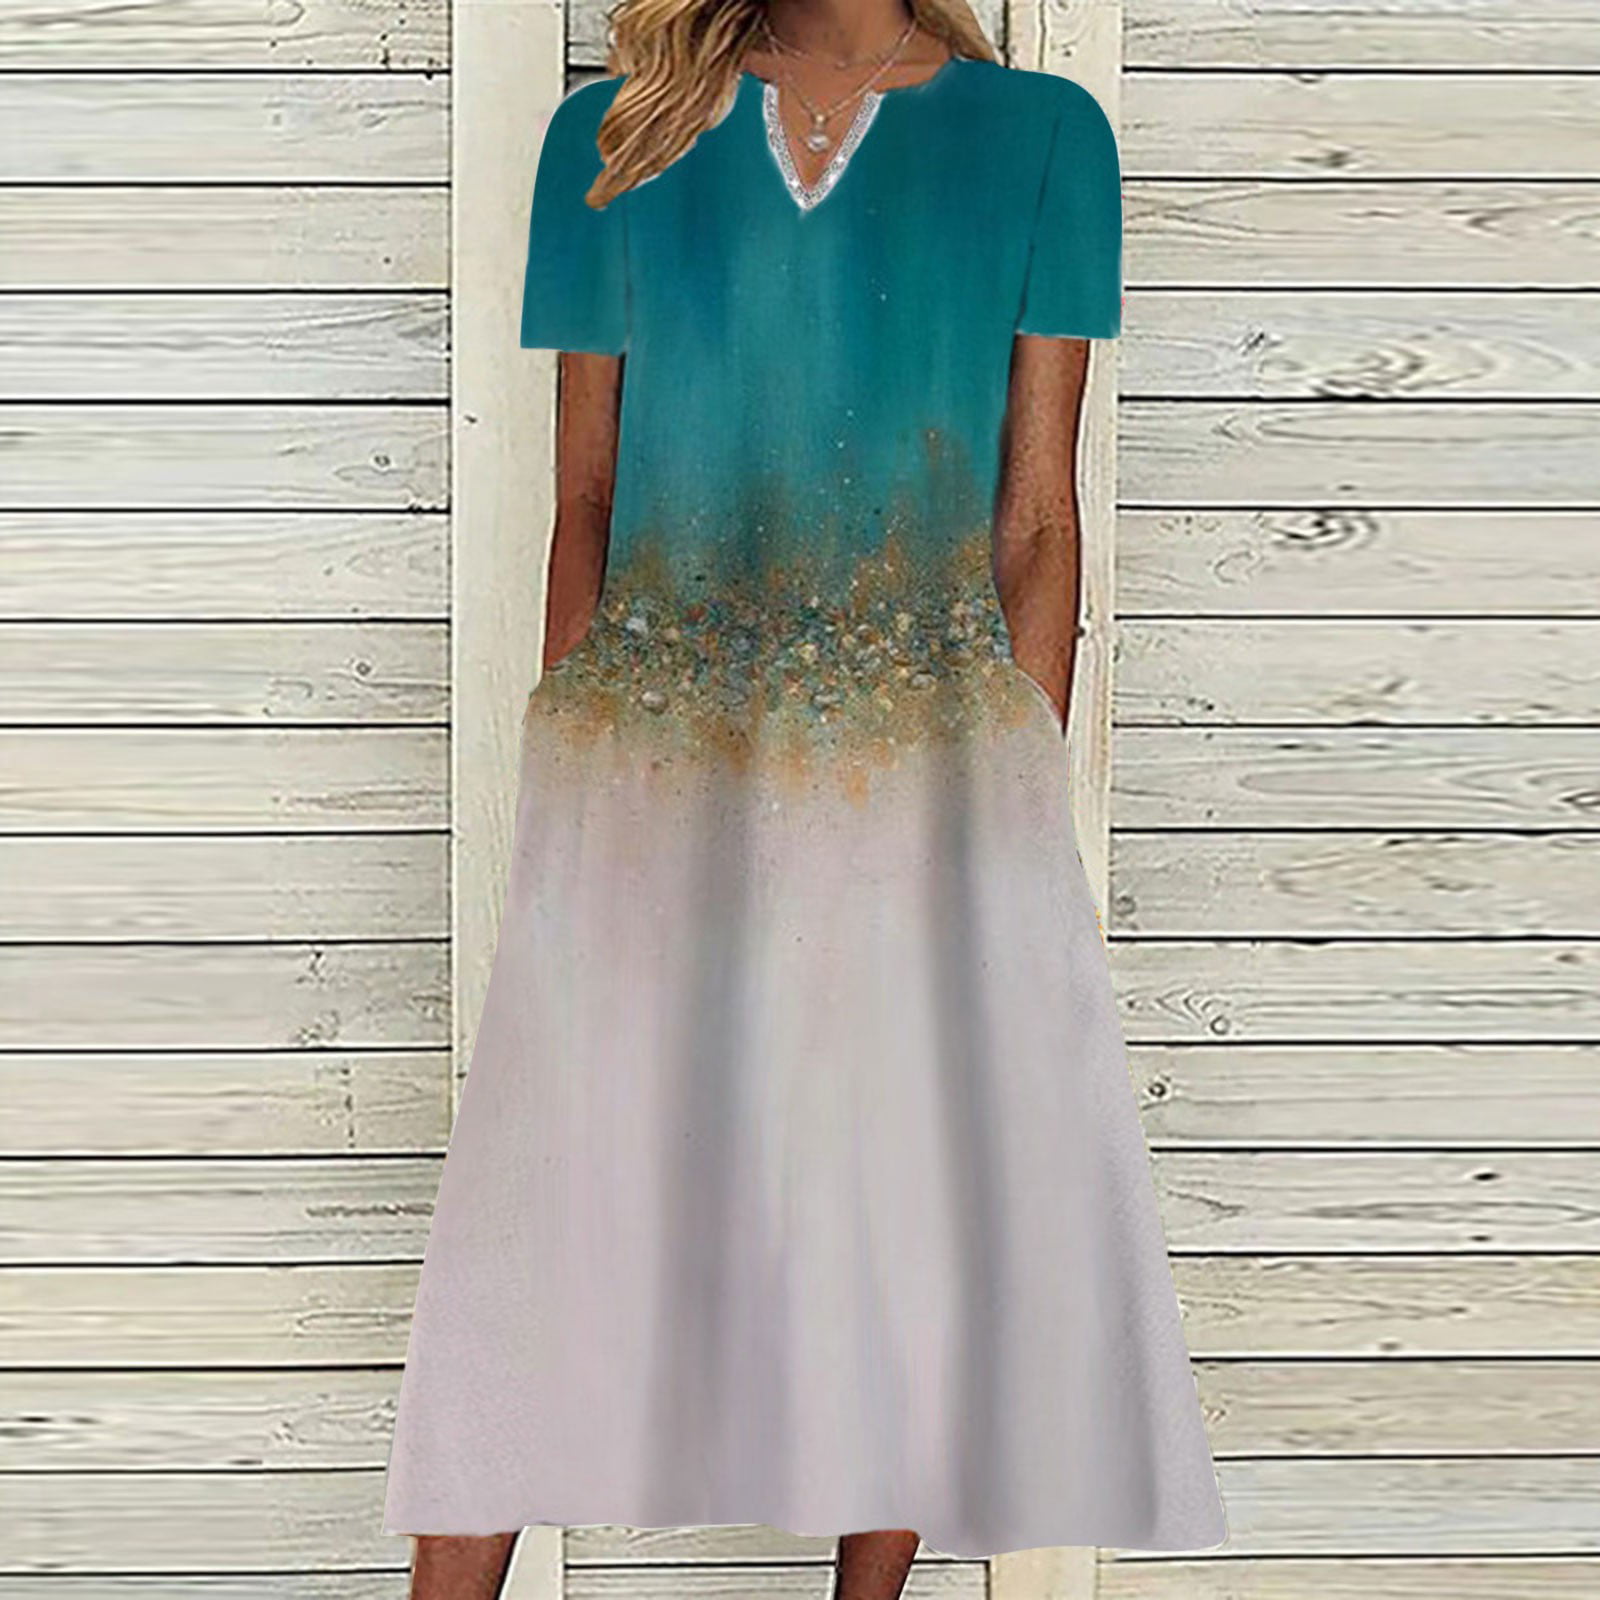 Sayhi Floral Sling Dress Polyester Ladies Summer V Neck Boho Dress Print Mini Dress Beach Casual Sundress 